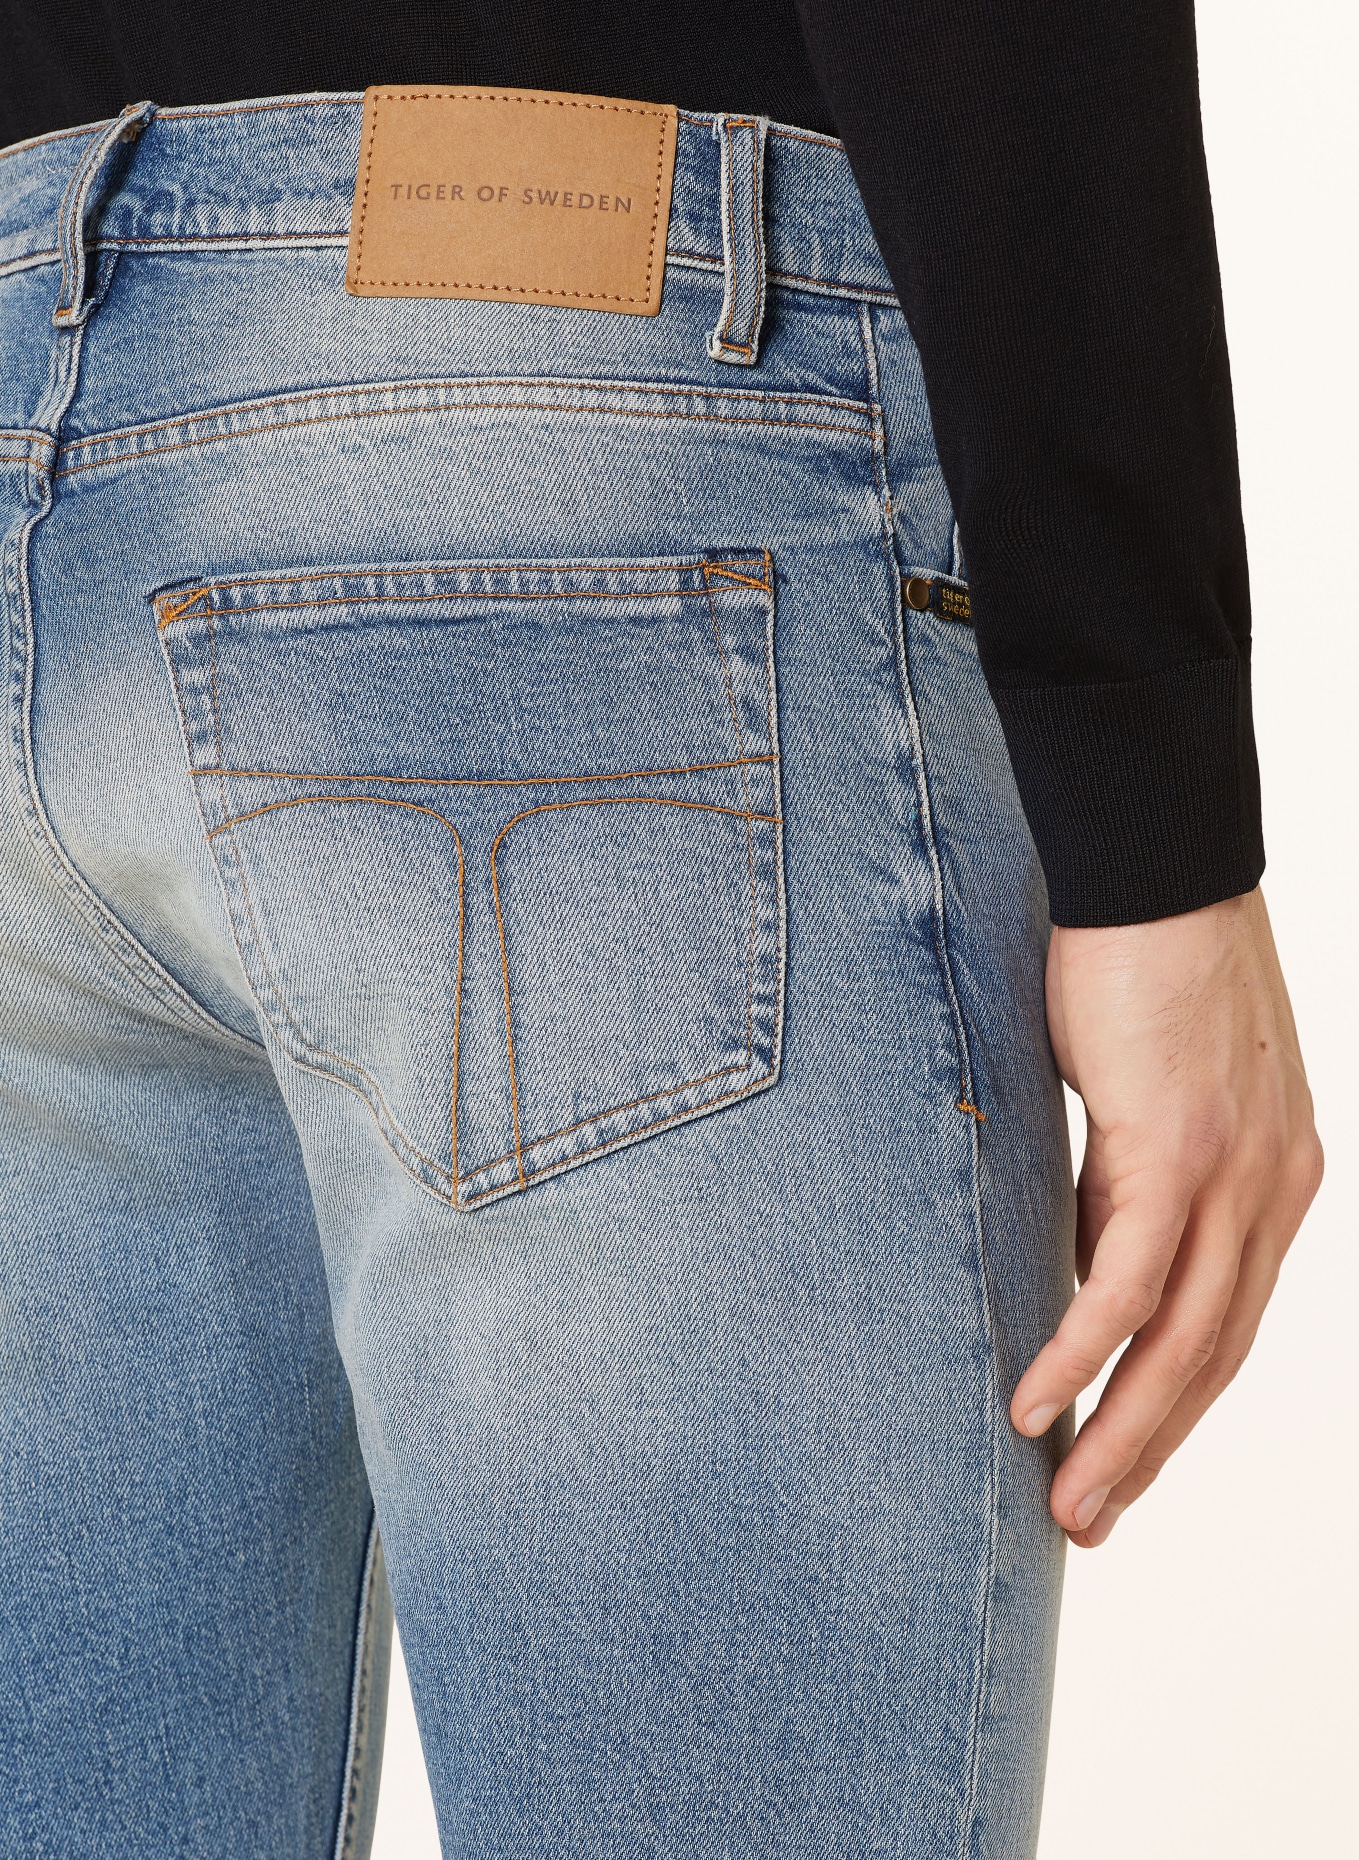 TIGER OF SWEDEN Jeans PISTOLERO Slim Fit, Farbe: 200 Light blue (Bild 6)